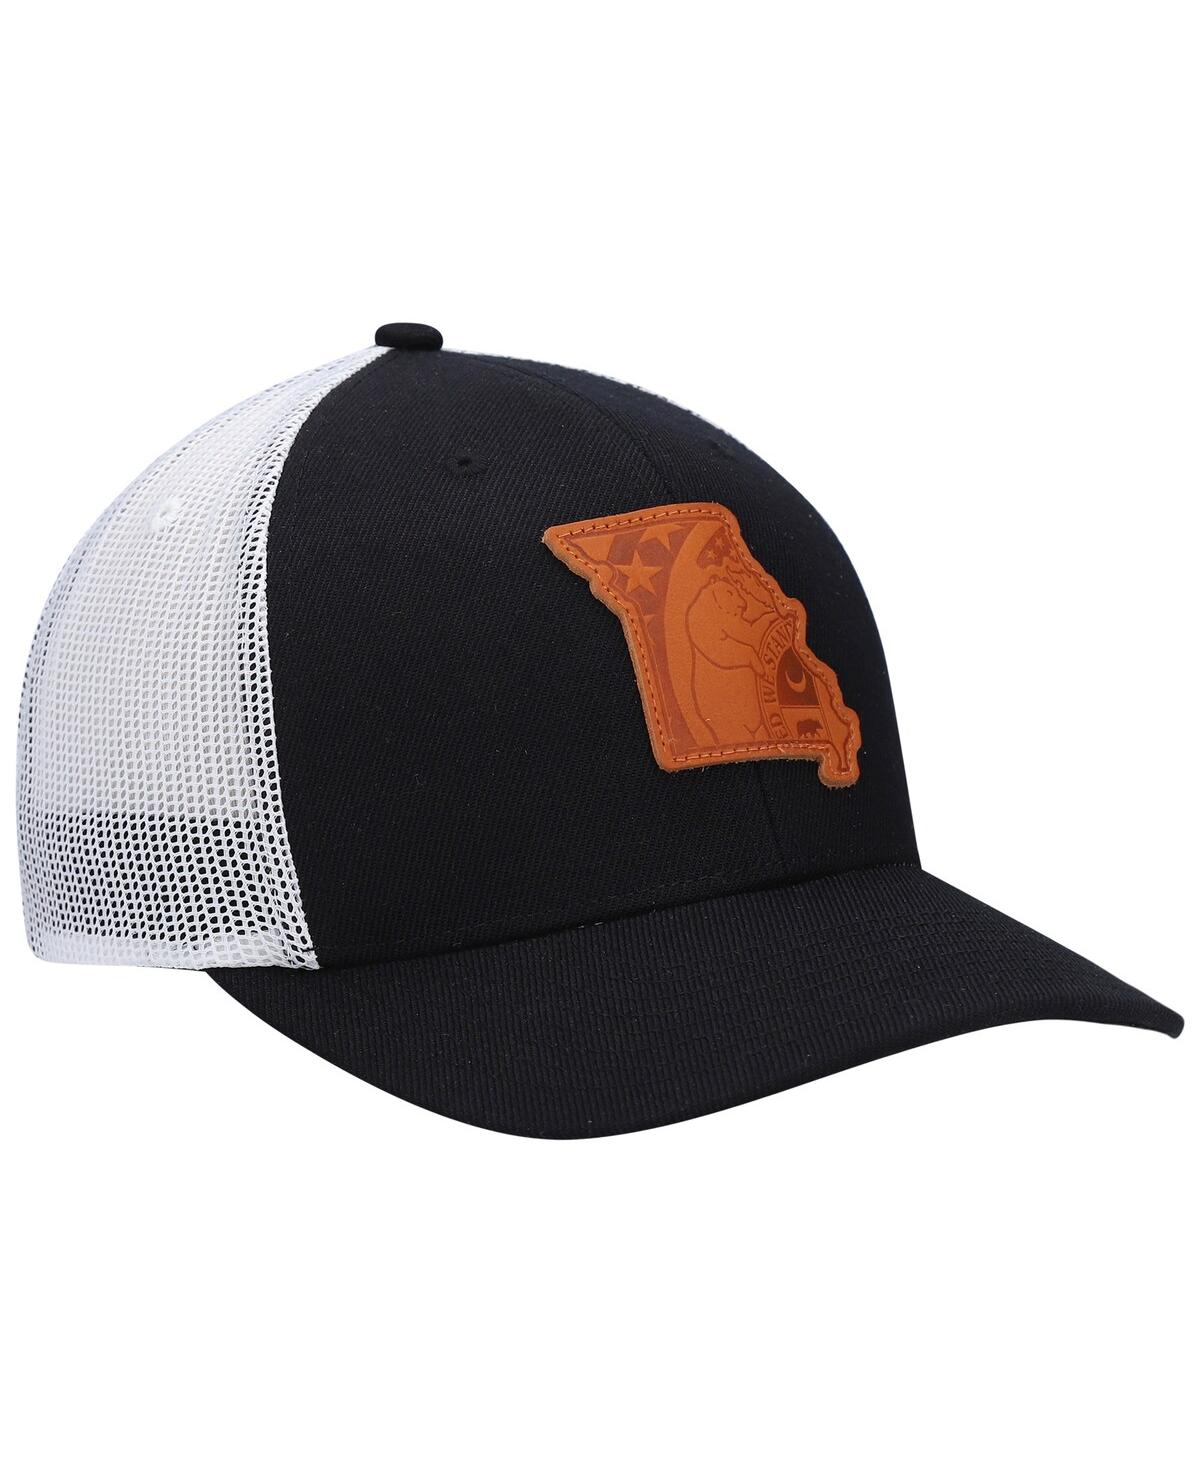 Shop Local Crowns Men's  Black Missouri Leather State Applique Trucker Snapback Hat